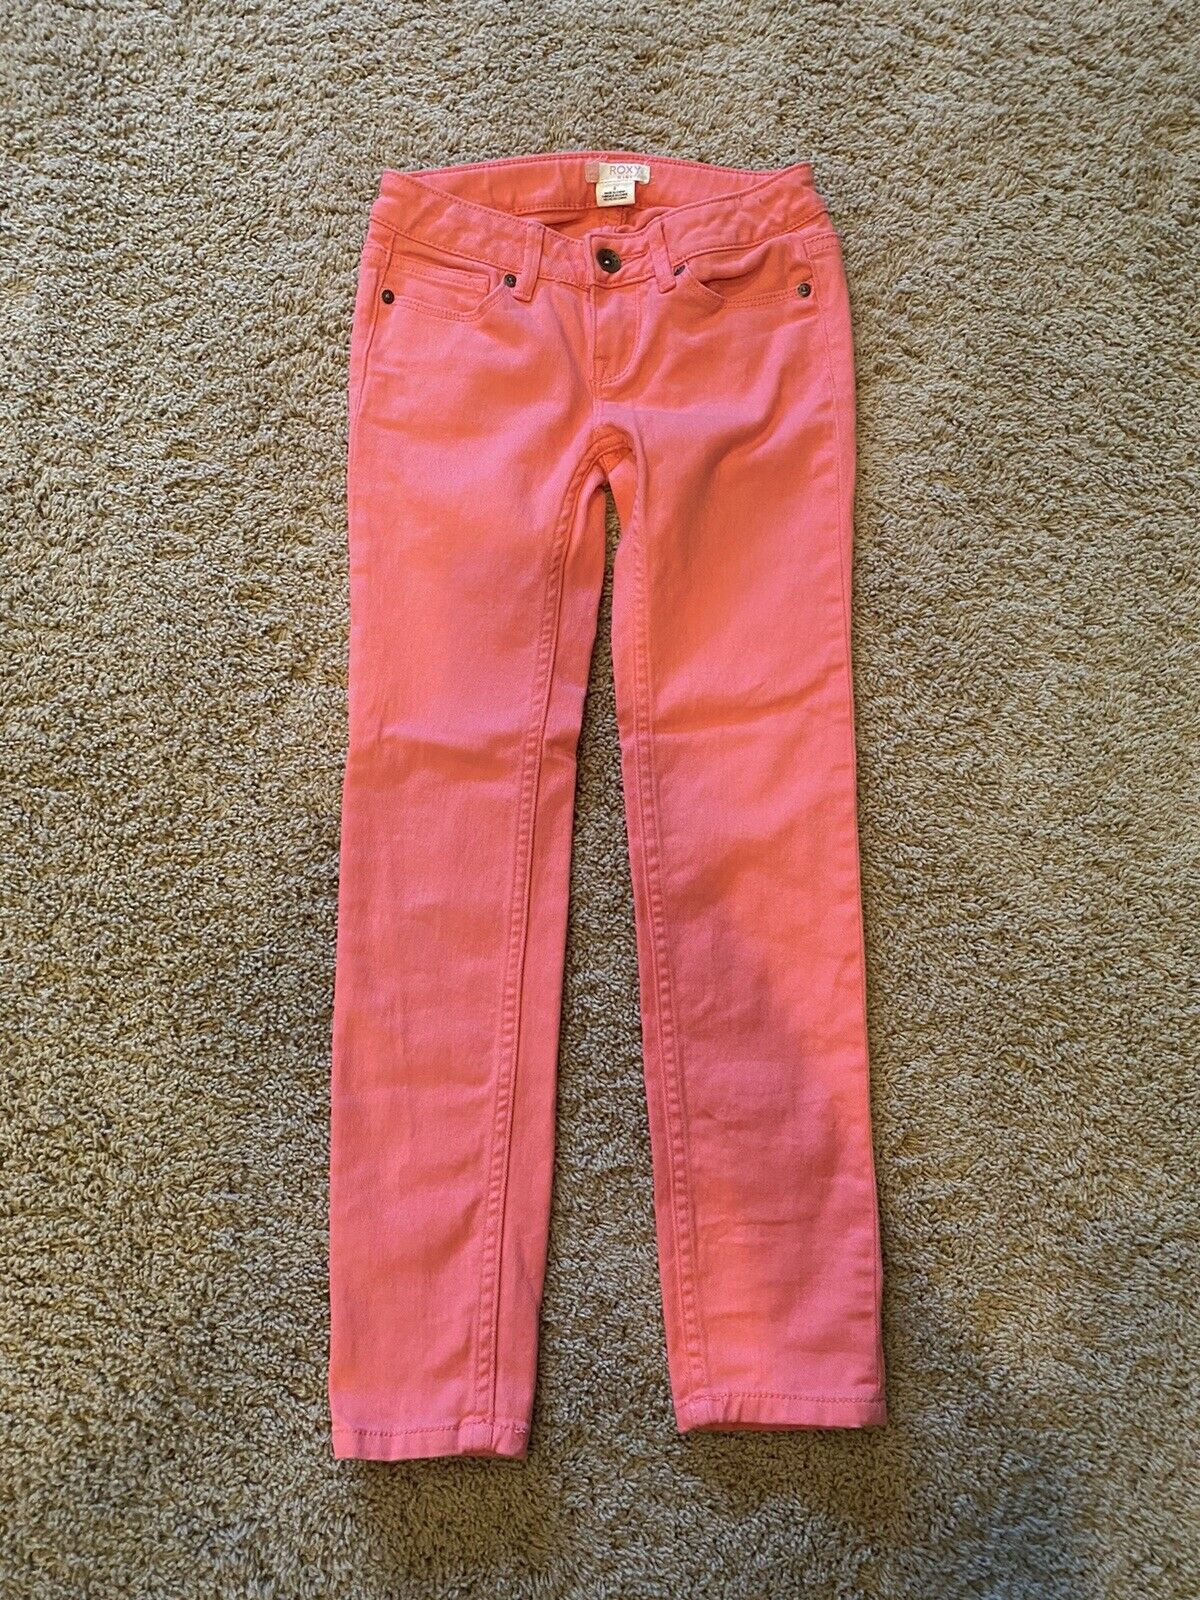 Roxy Girl Denim Skinny Jean Pant Girls Size 8 Coral Orange Super Cute!